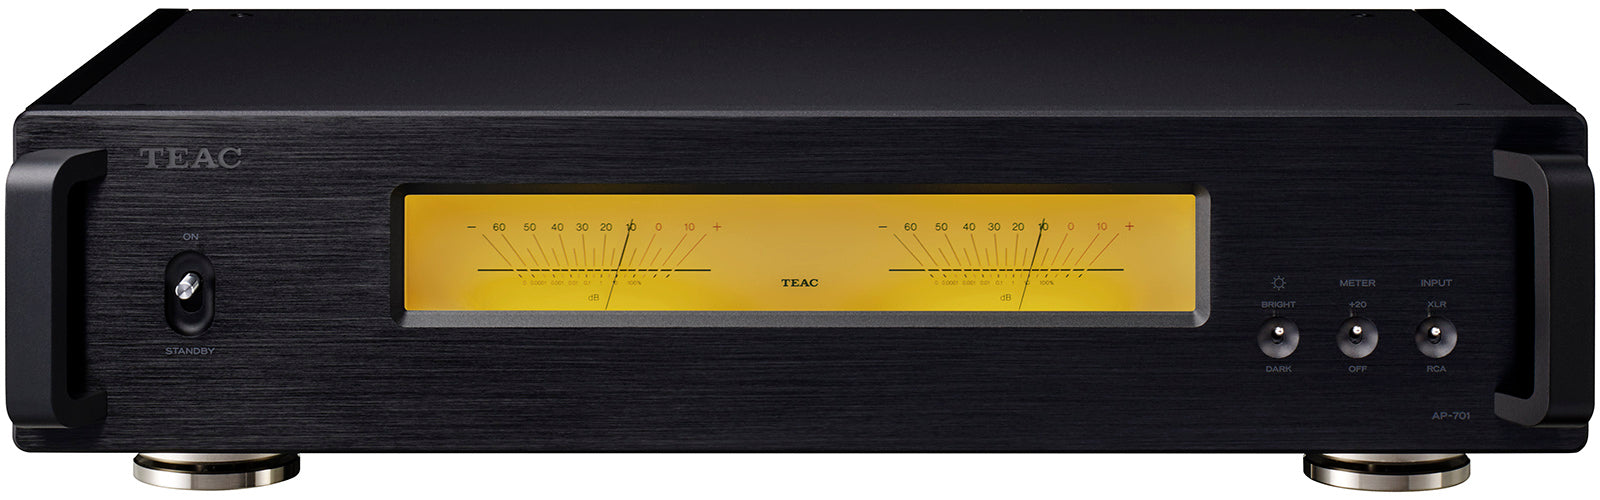 Teac AP-701 power amplifier